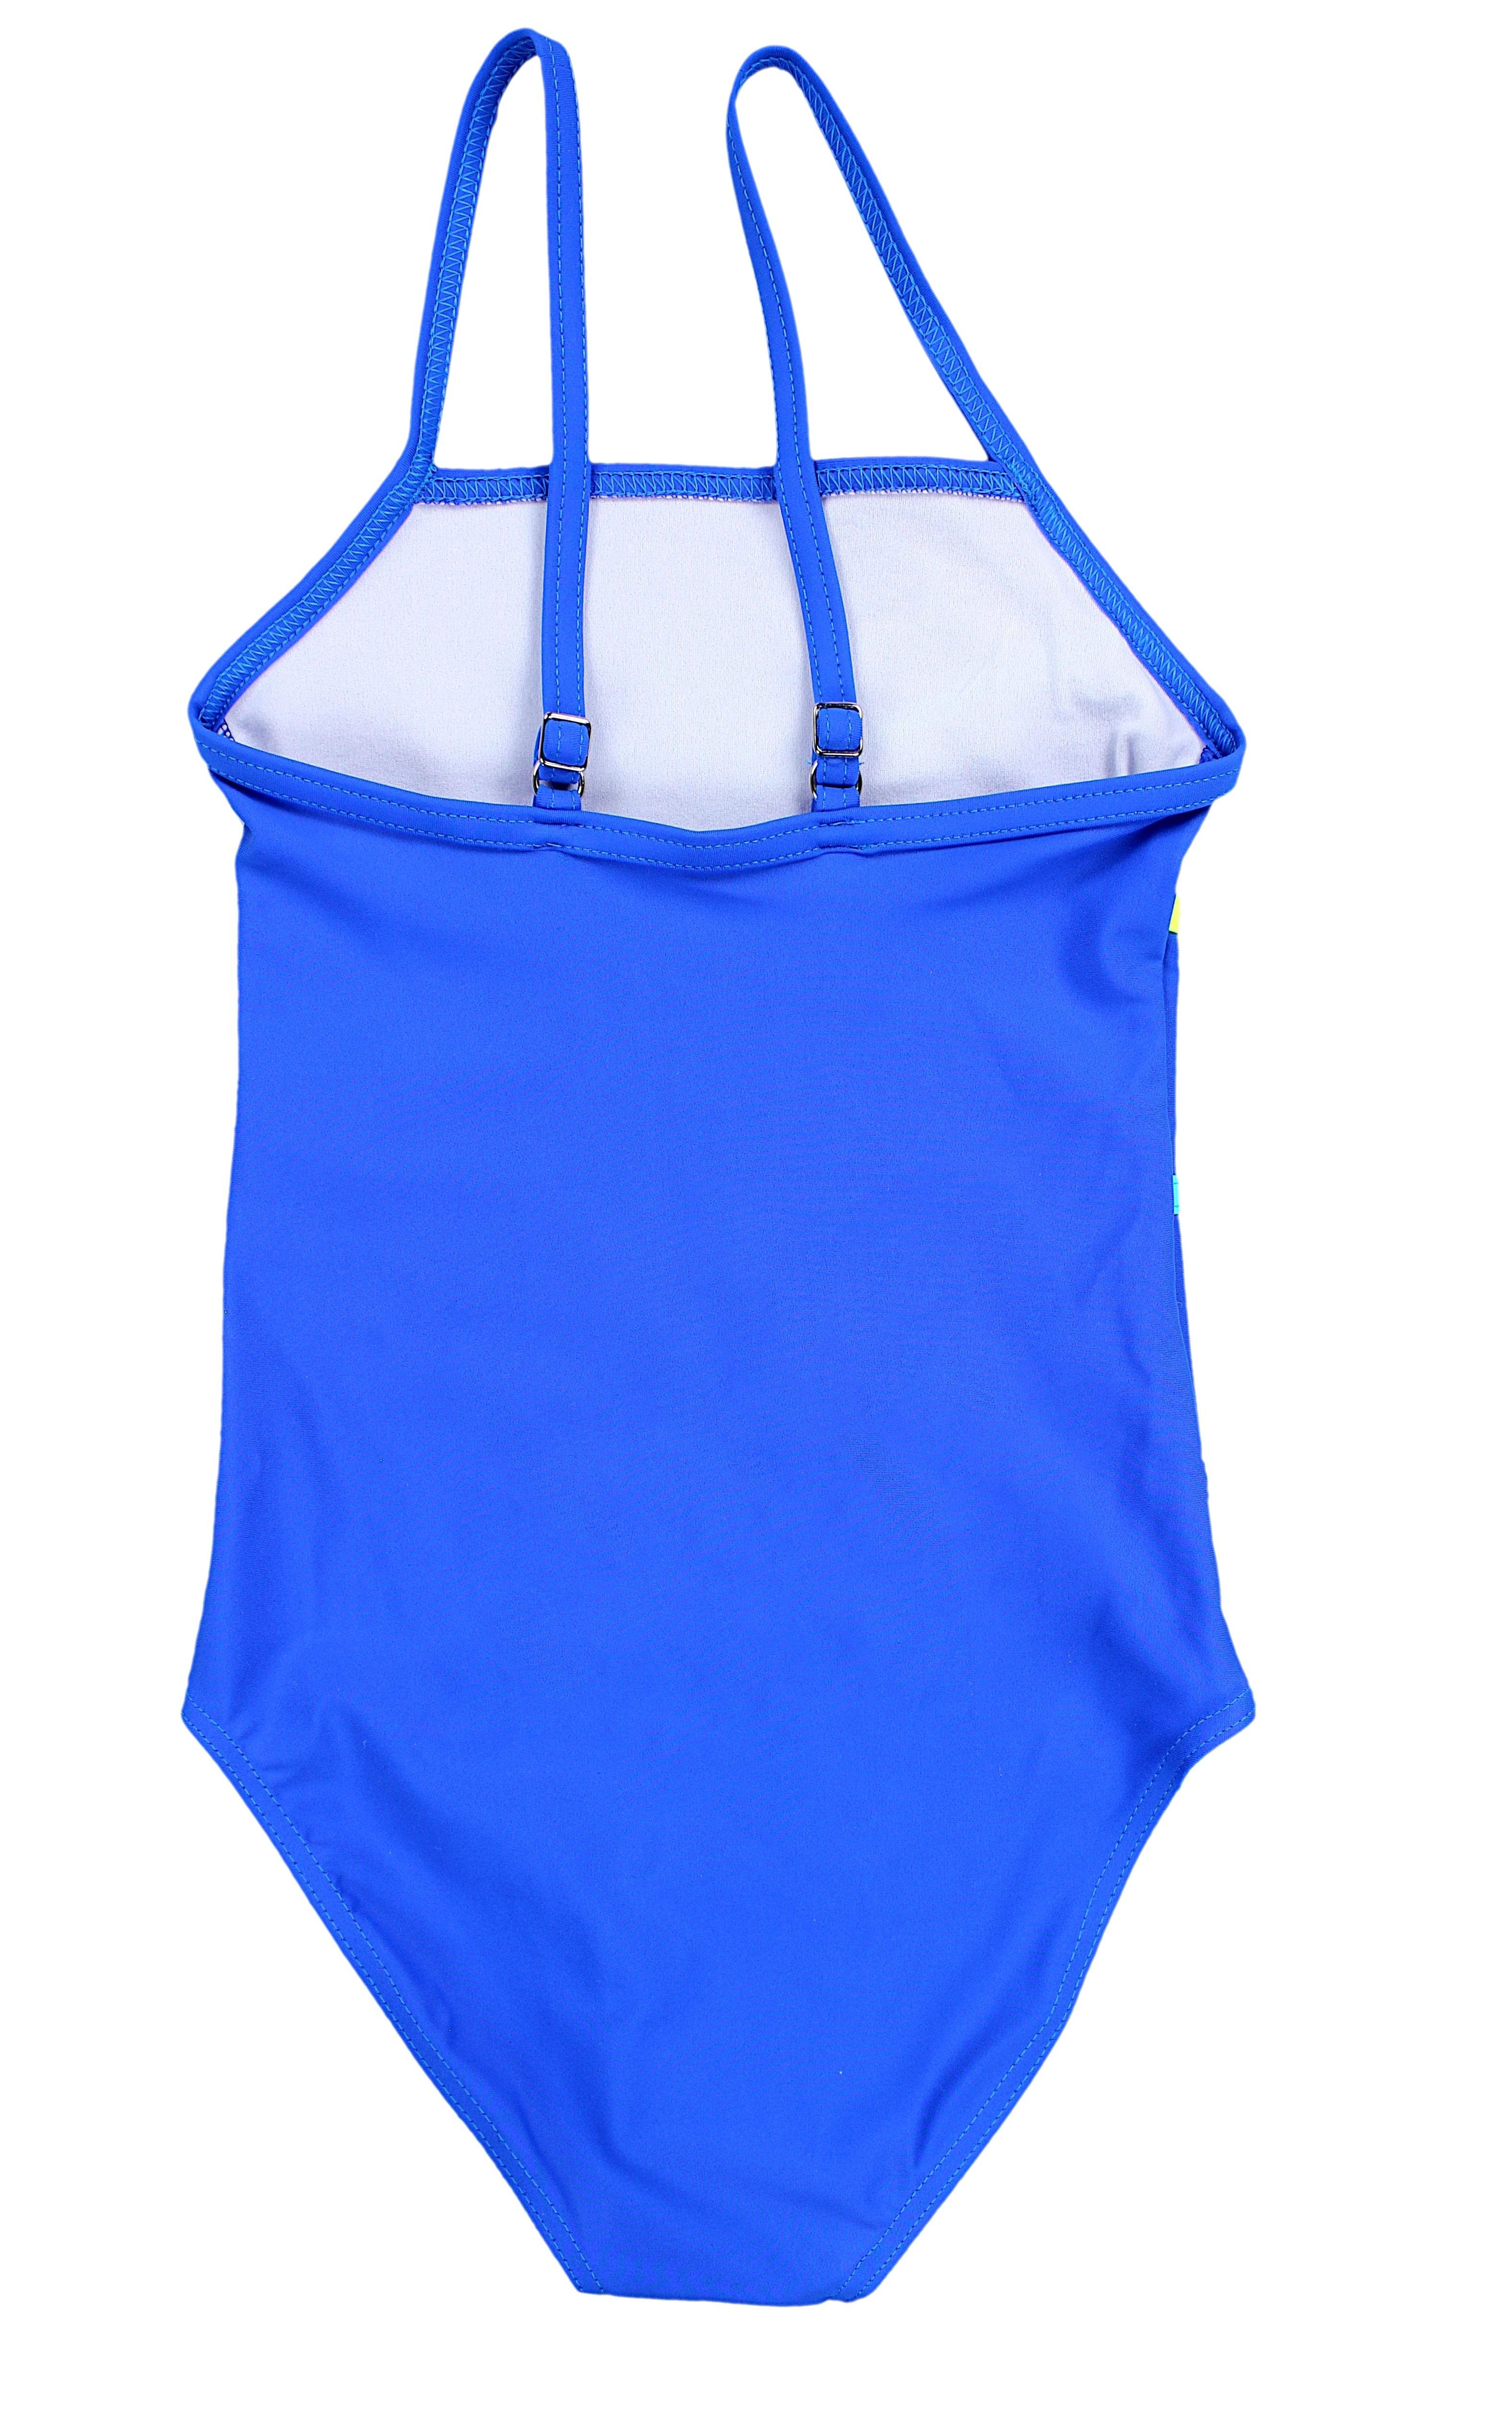 Mädchen Aquarti Aquarti Badeanzug Spaghettiträgern Streifen Gelb Blau Badeanzug mit / Kornblumenblau Streifen